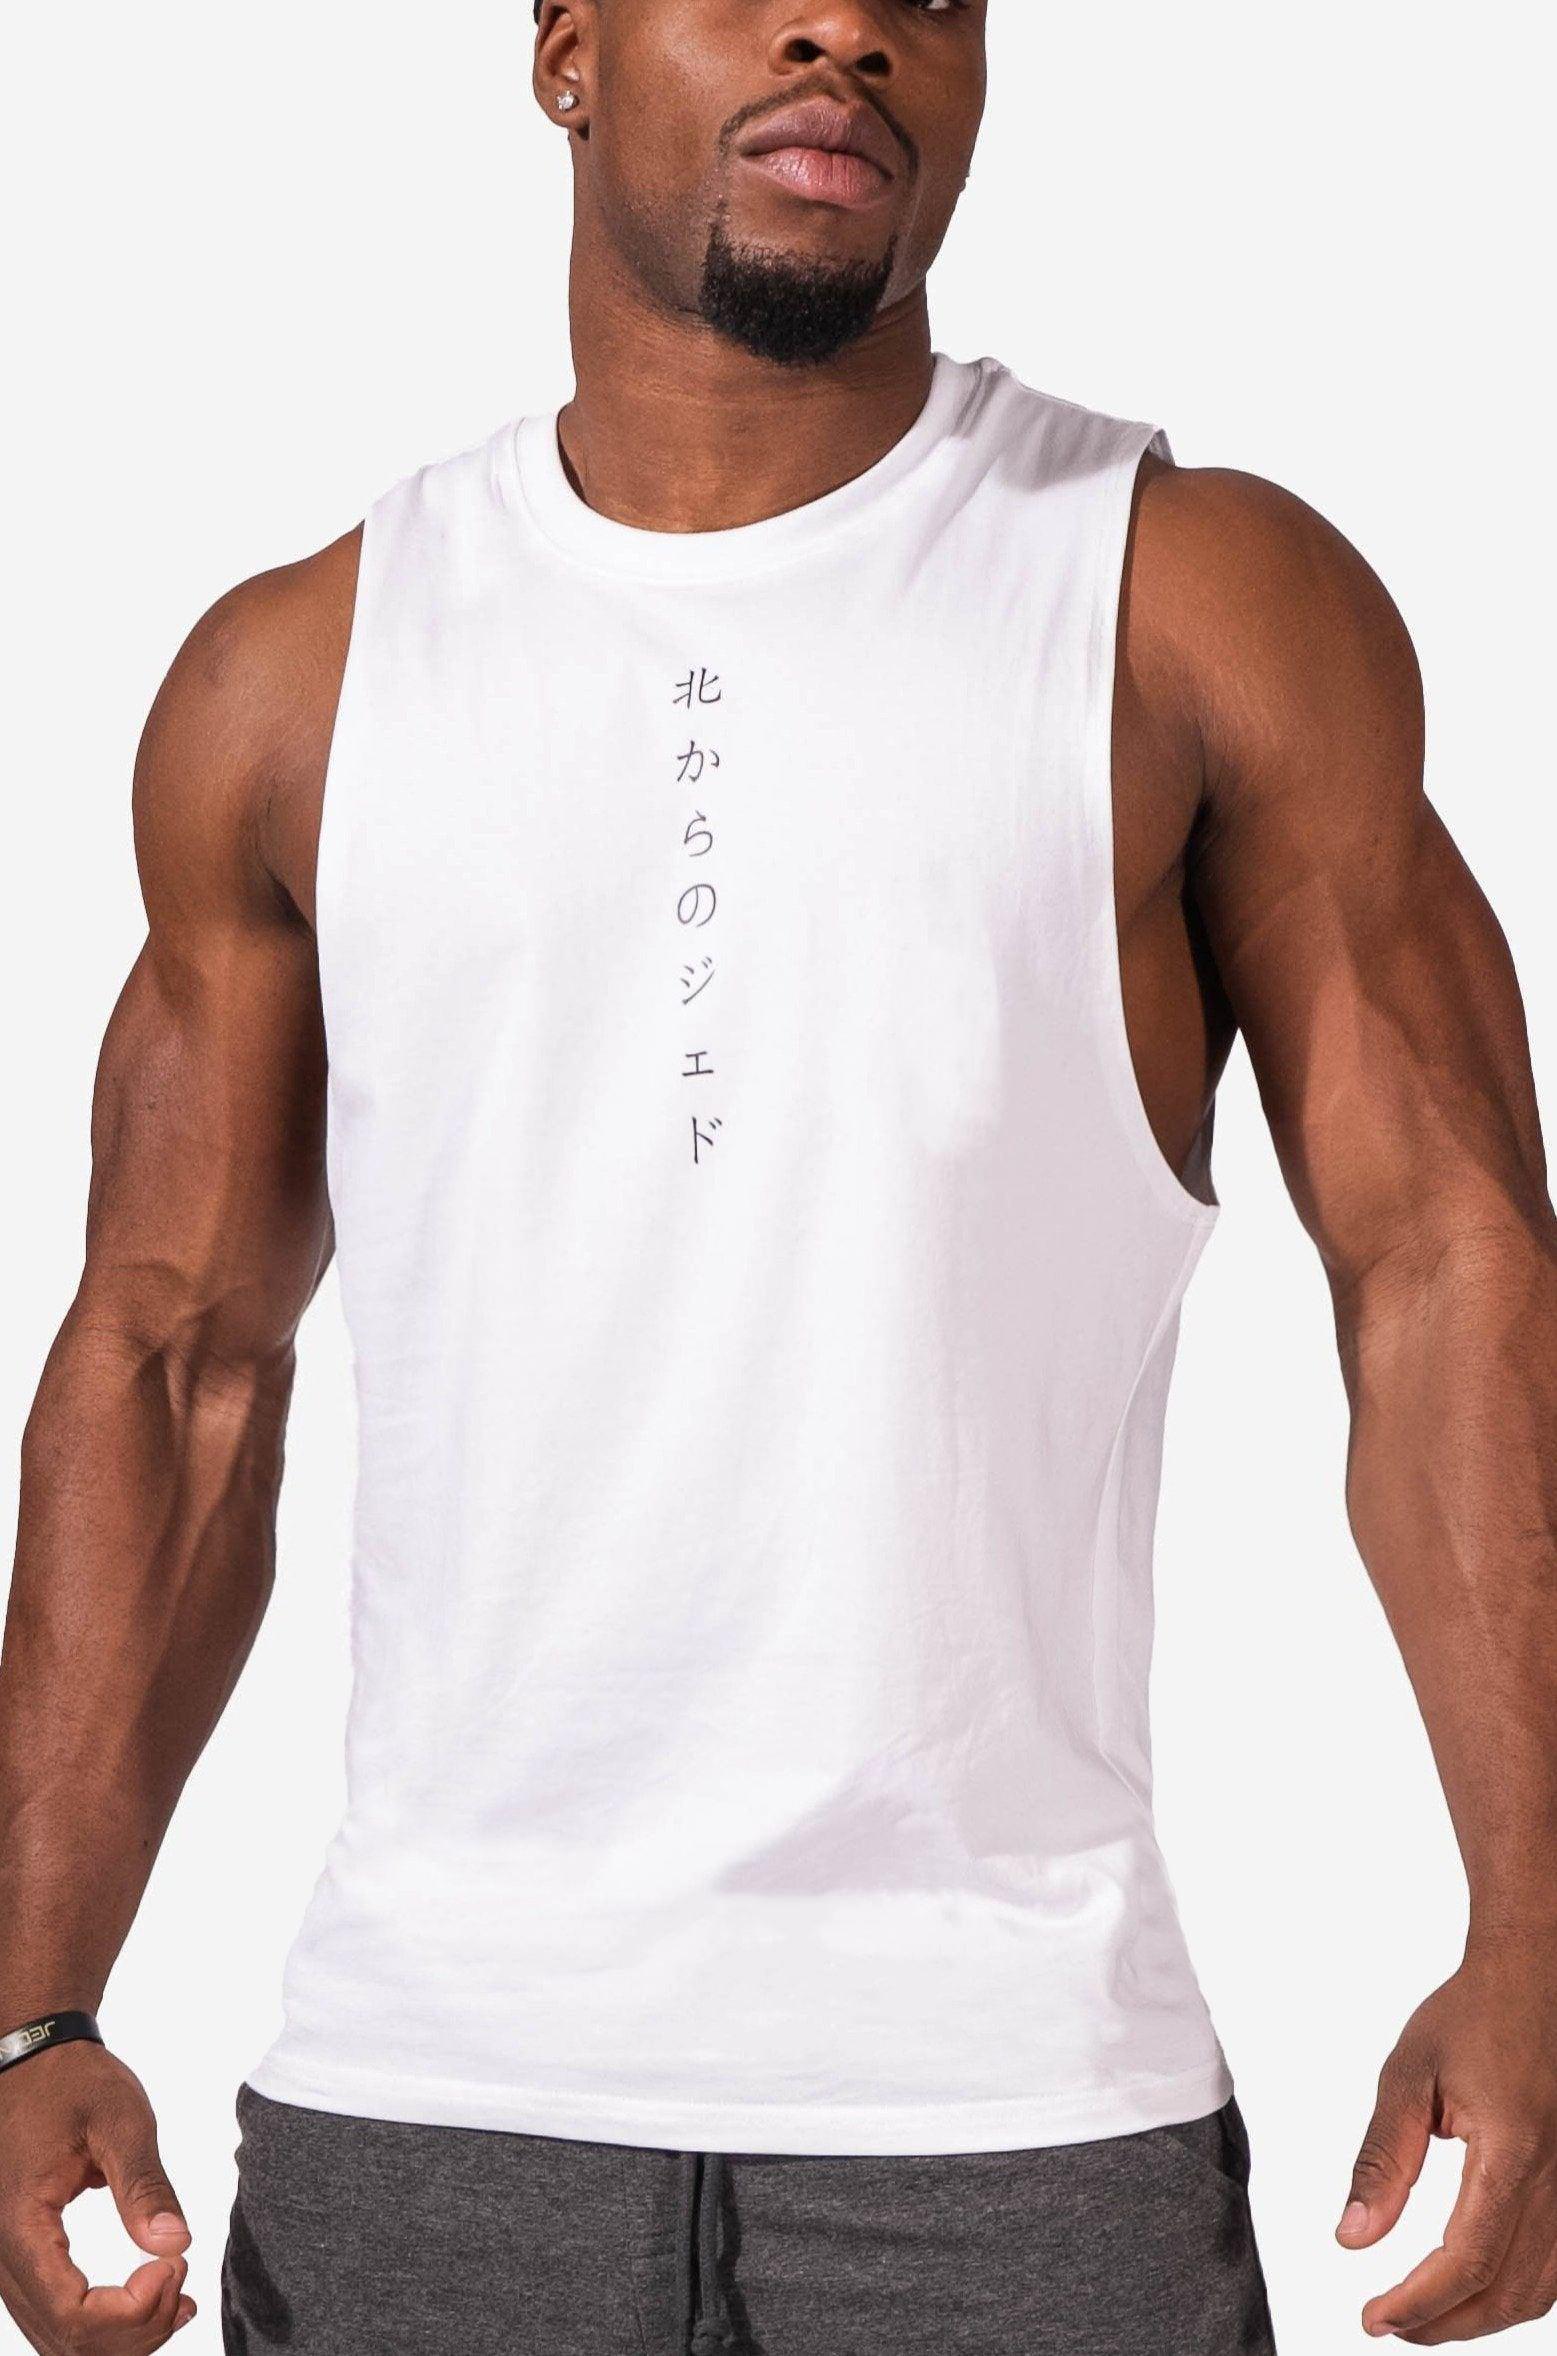 3 Men Slim Muscle Tank Top T-Shirt Ribbed Sleeveless Gym Fashion A-Shirt  White S